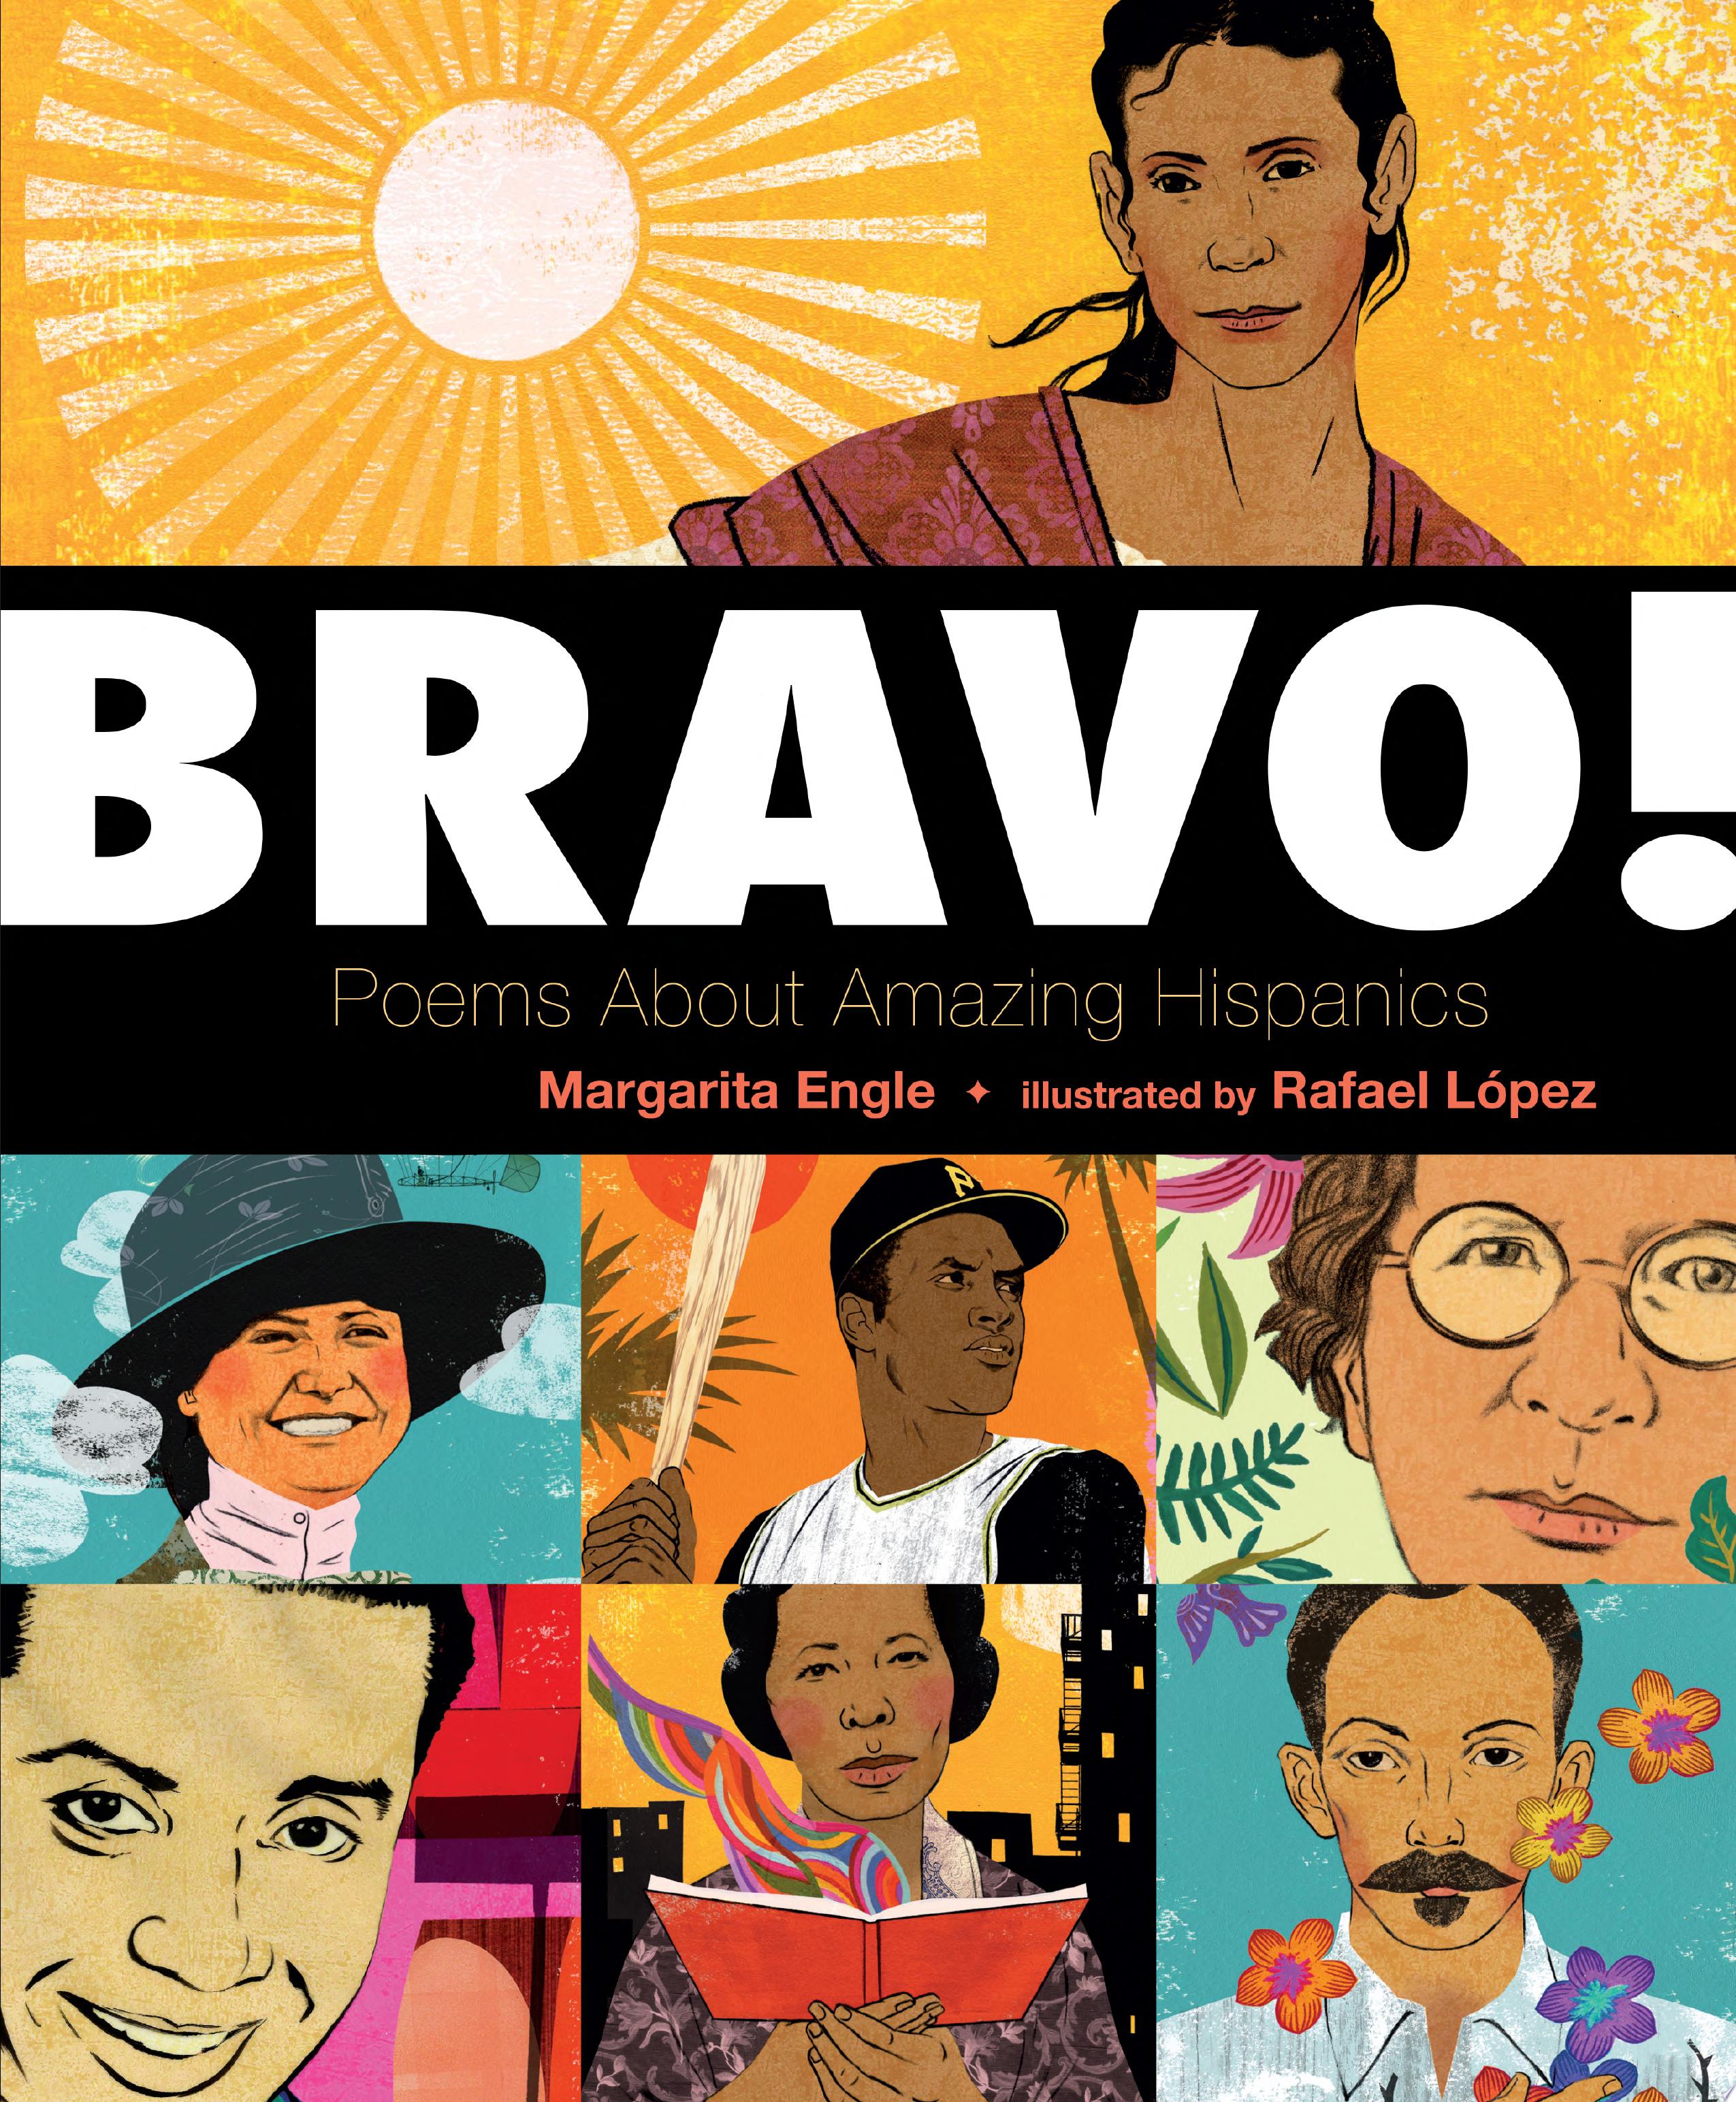 Image for "Bravo!"